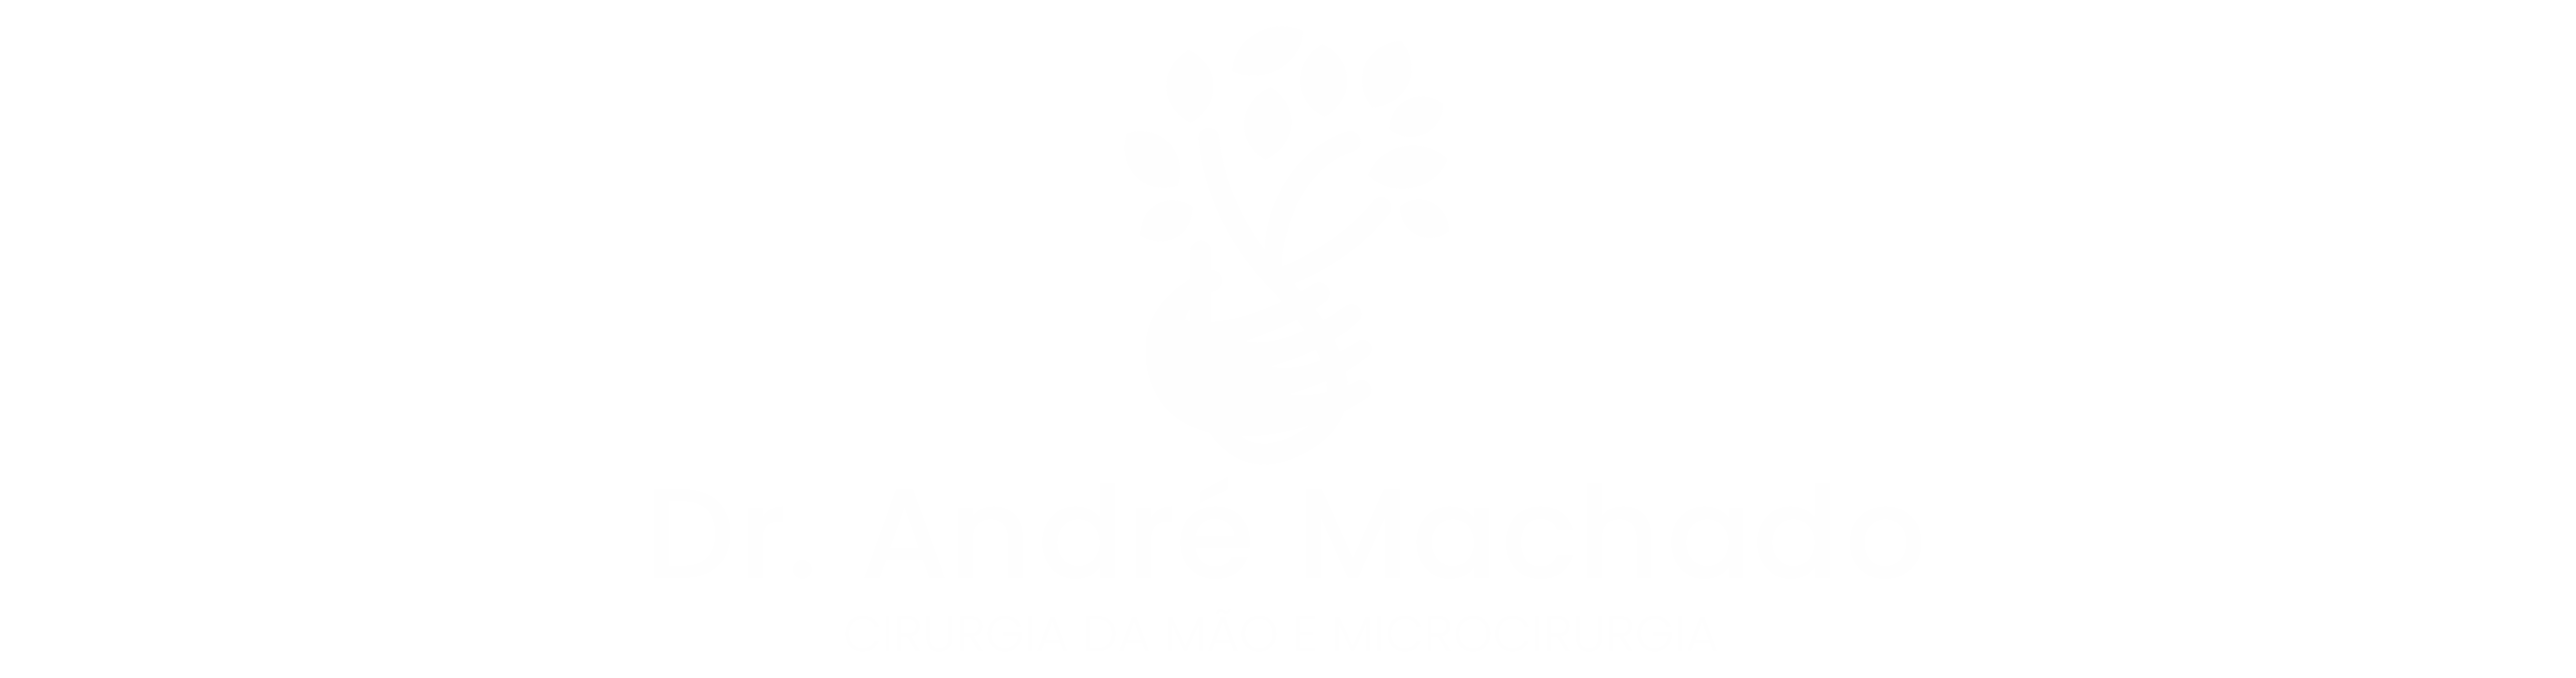 Dr. Andre Machado